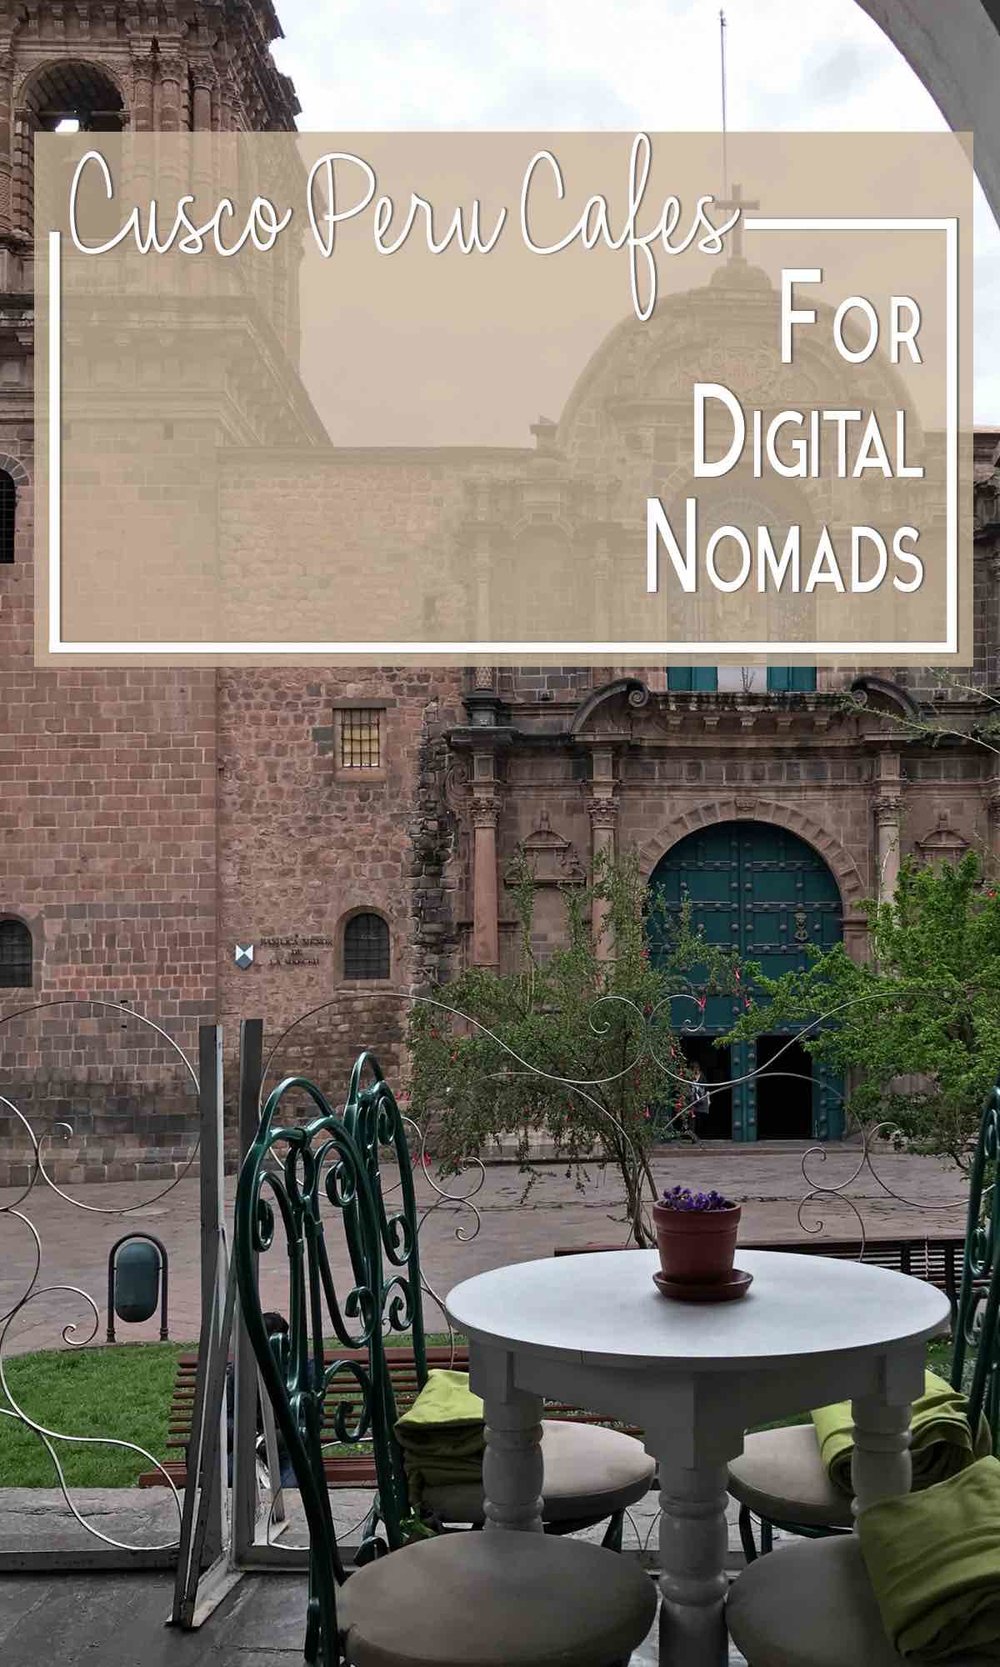 Cusco Peru cafes for digital nomads